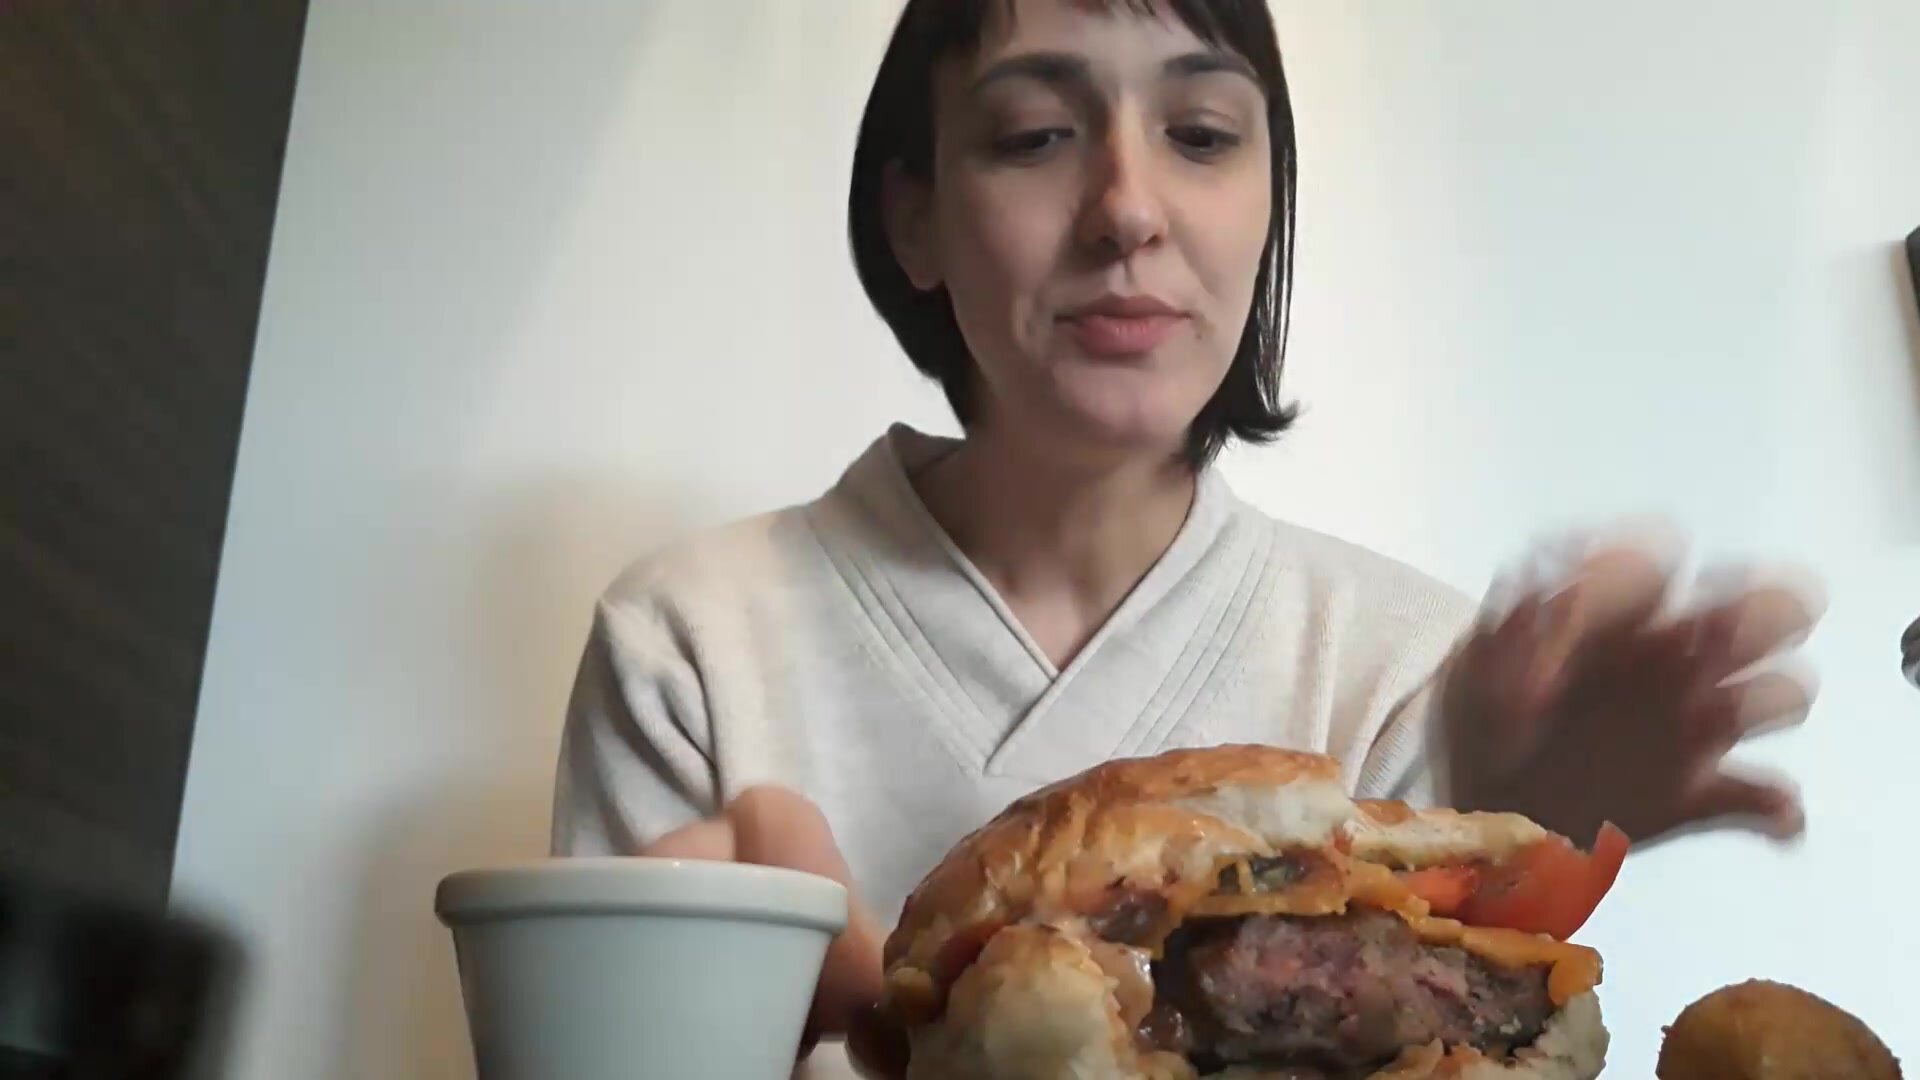 Russian girl eating a cheeseburger in a restaurant